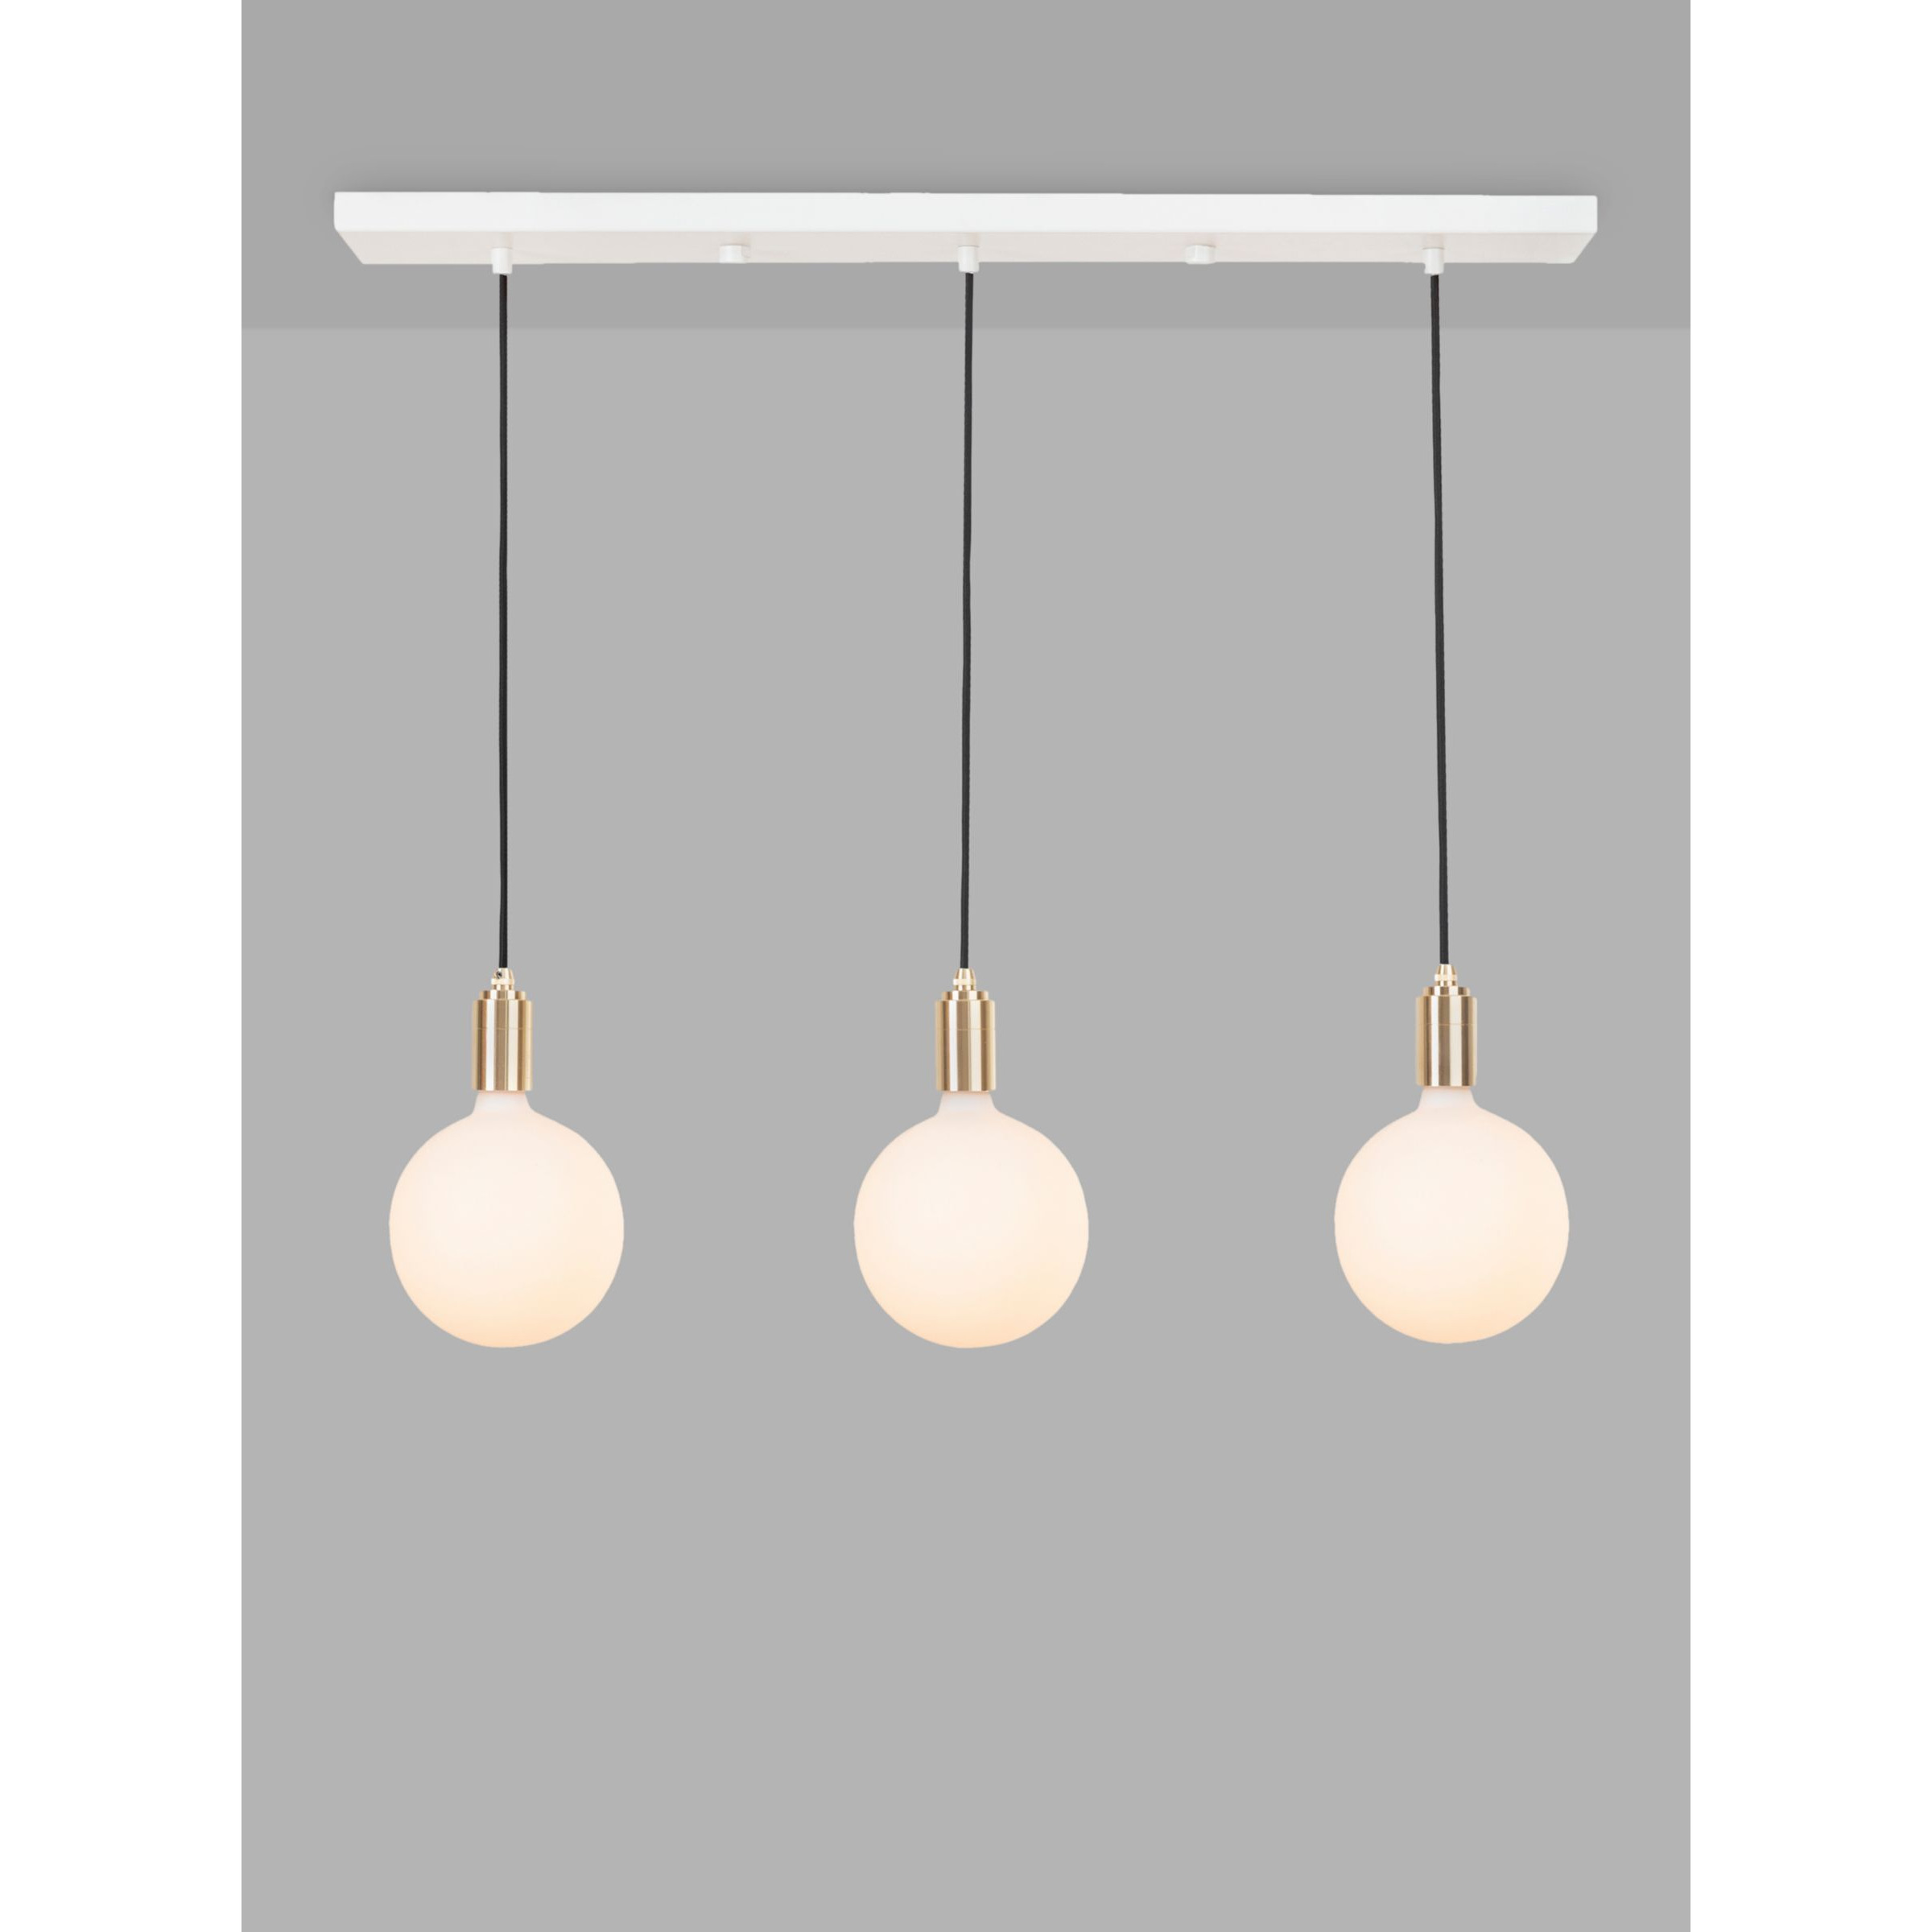 Tala Linear Bar Triple Pendant Ceiling Light with Sphere IV LED Bulbs, White - image 1